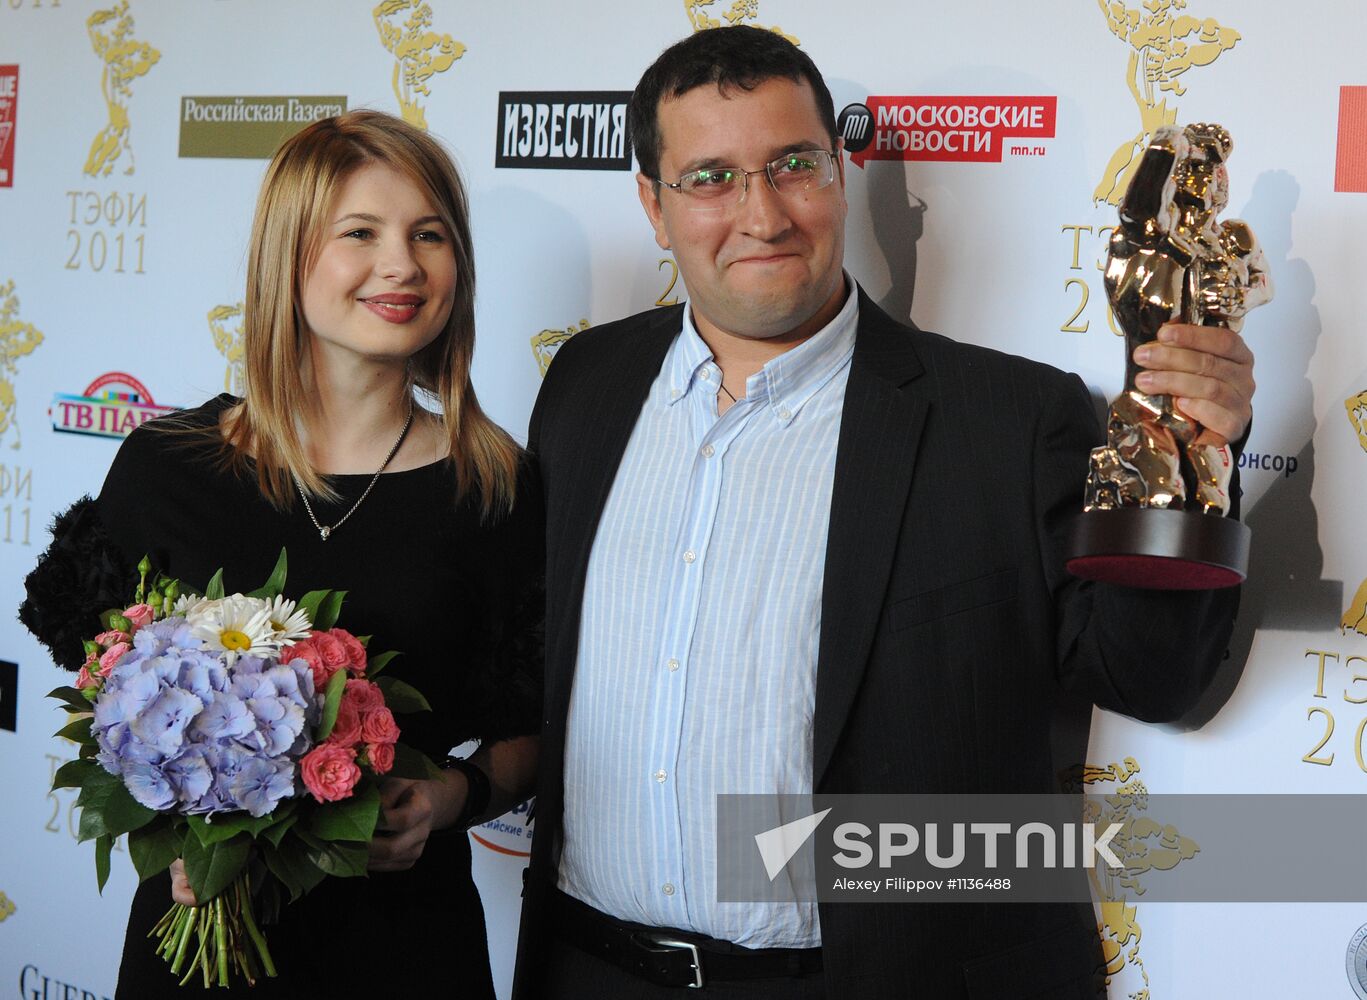 TEFI 2011 Awards - Professions